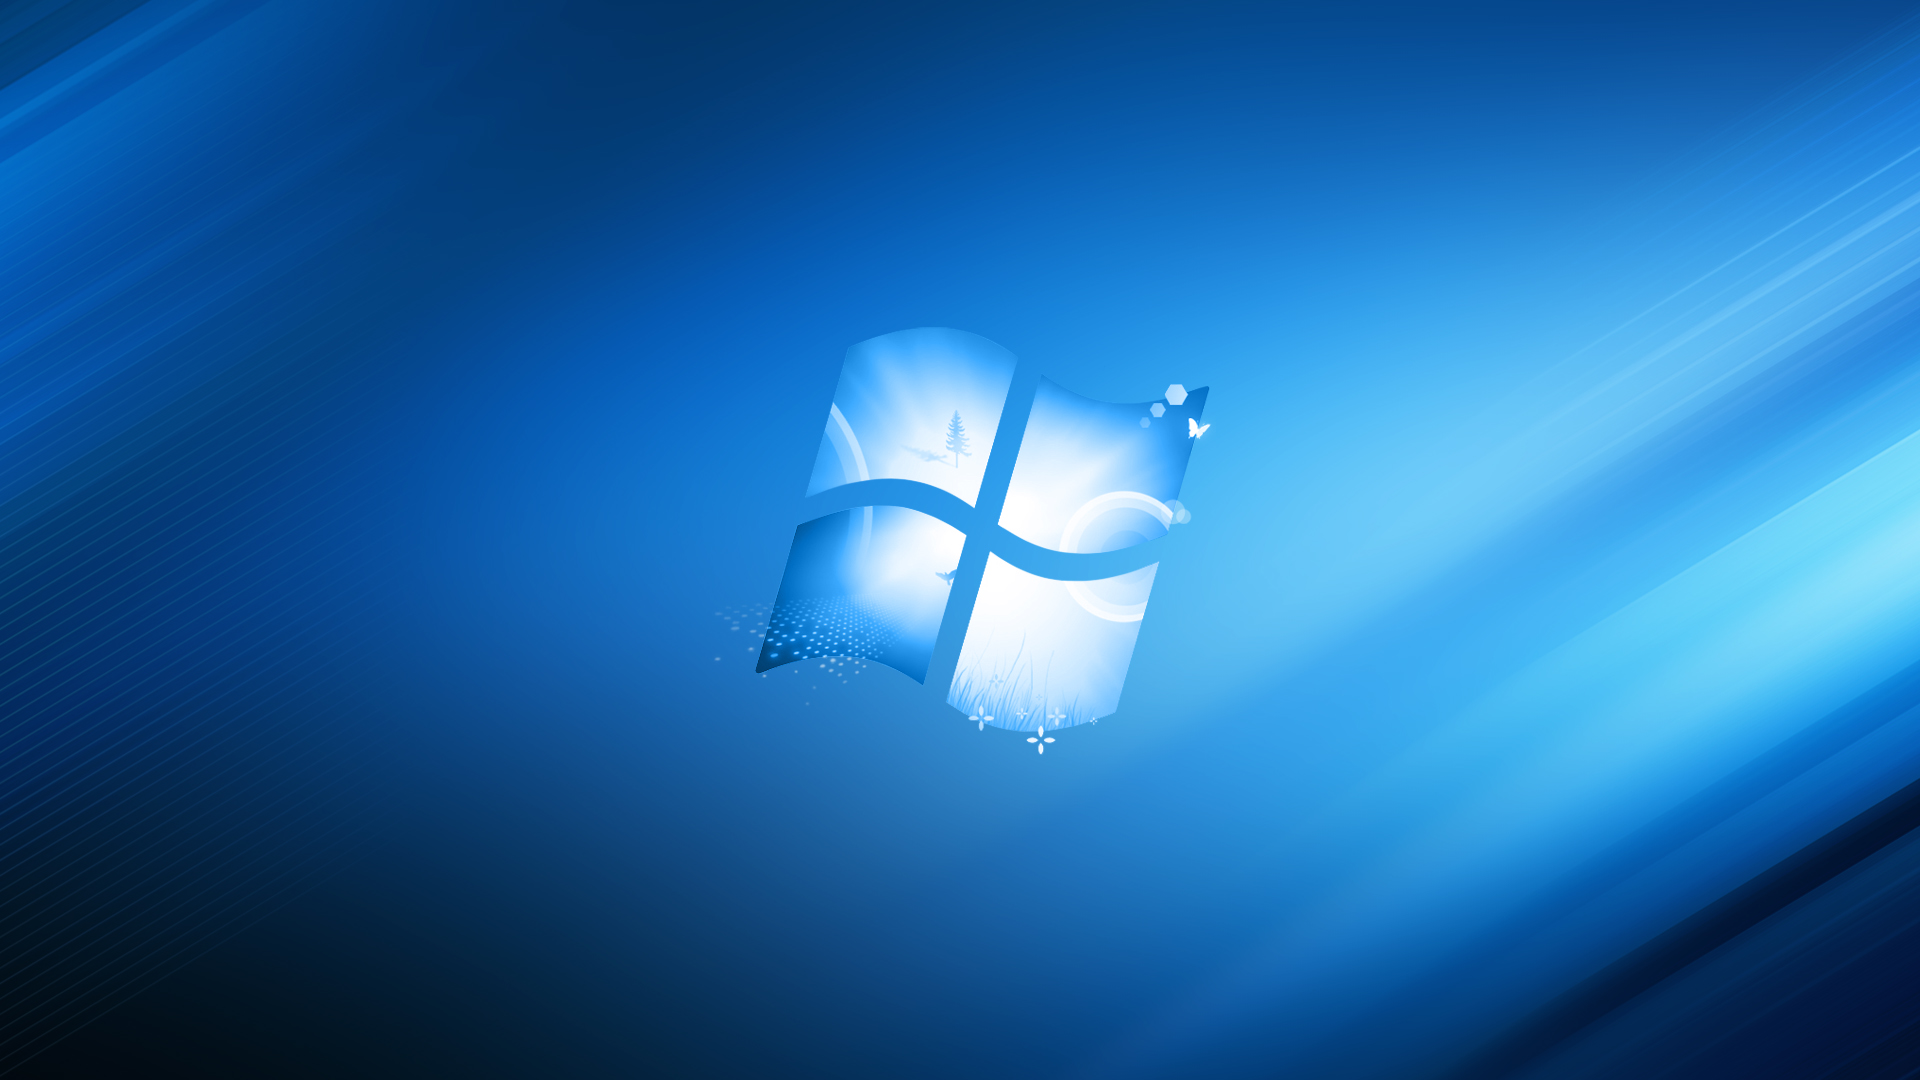 Windows 8 images Windows 8 Wallpaper 7 HD wallpaper and 1920x1080